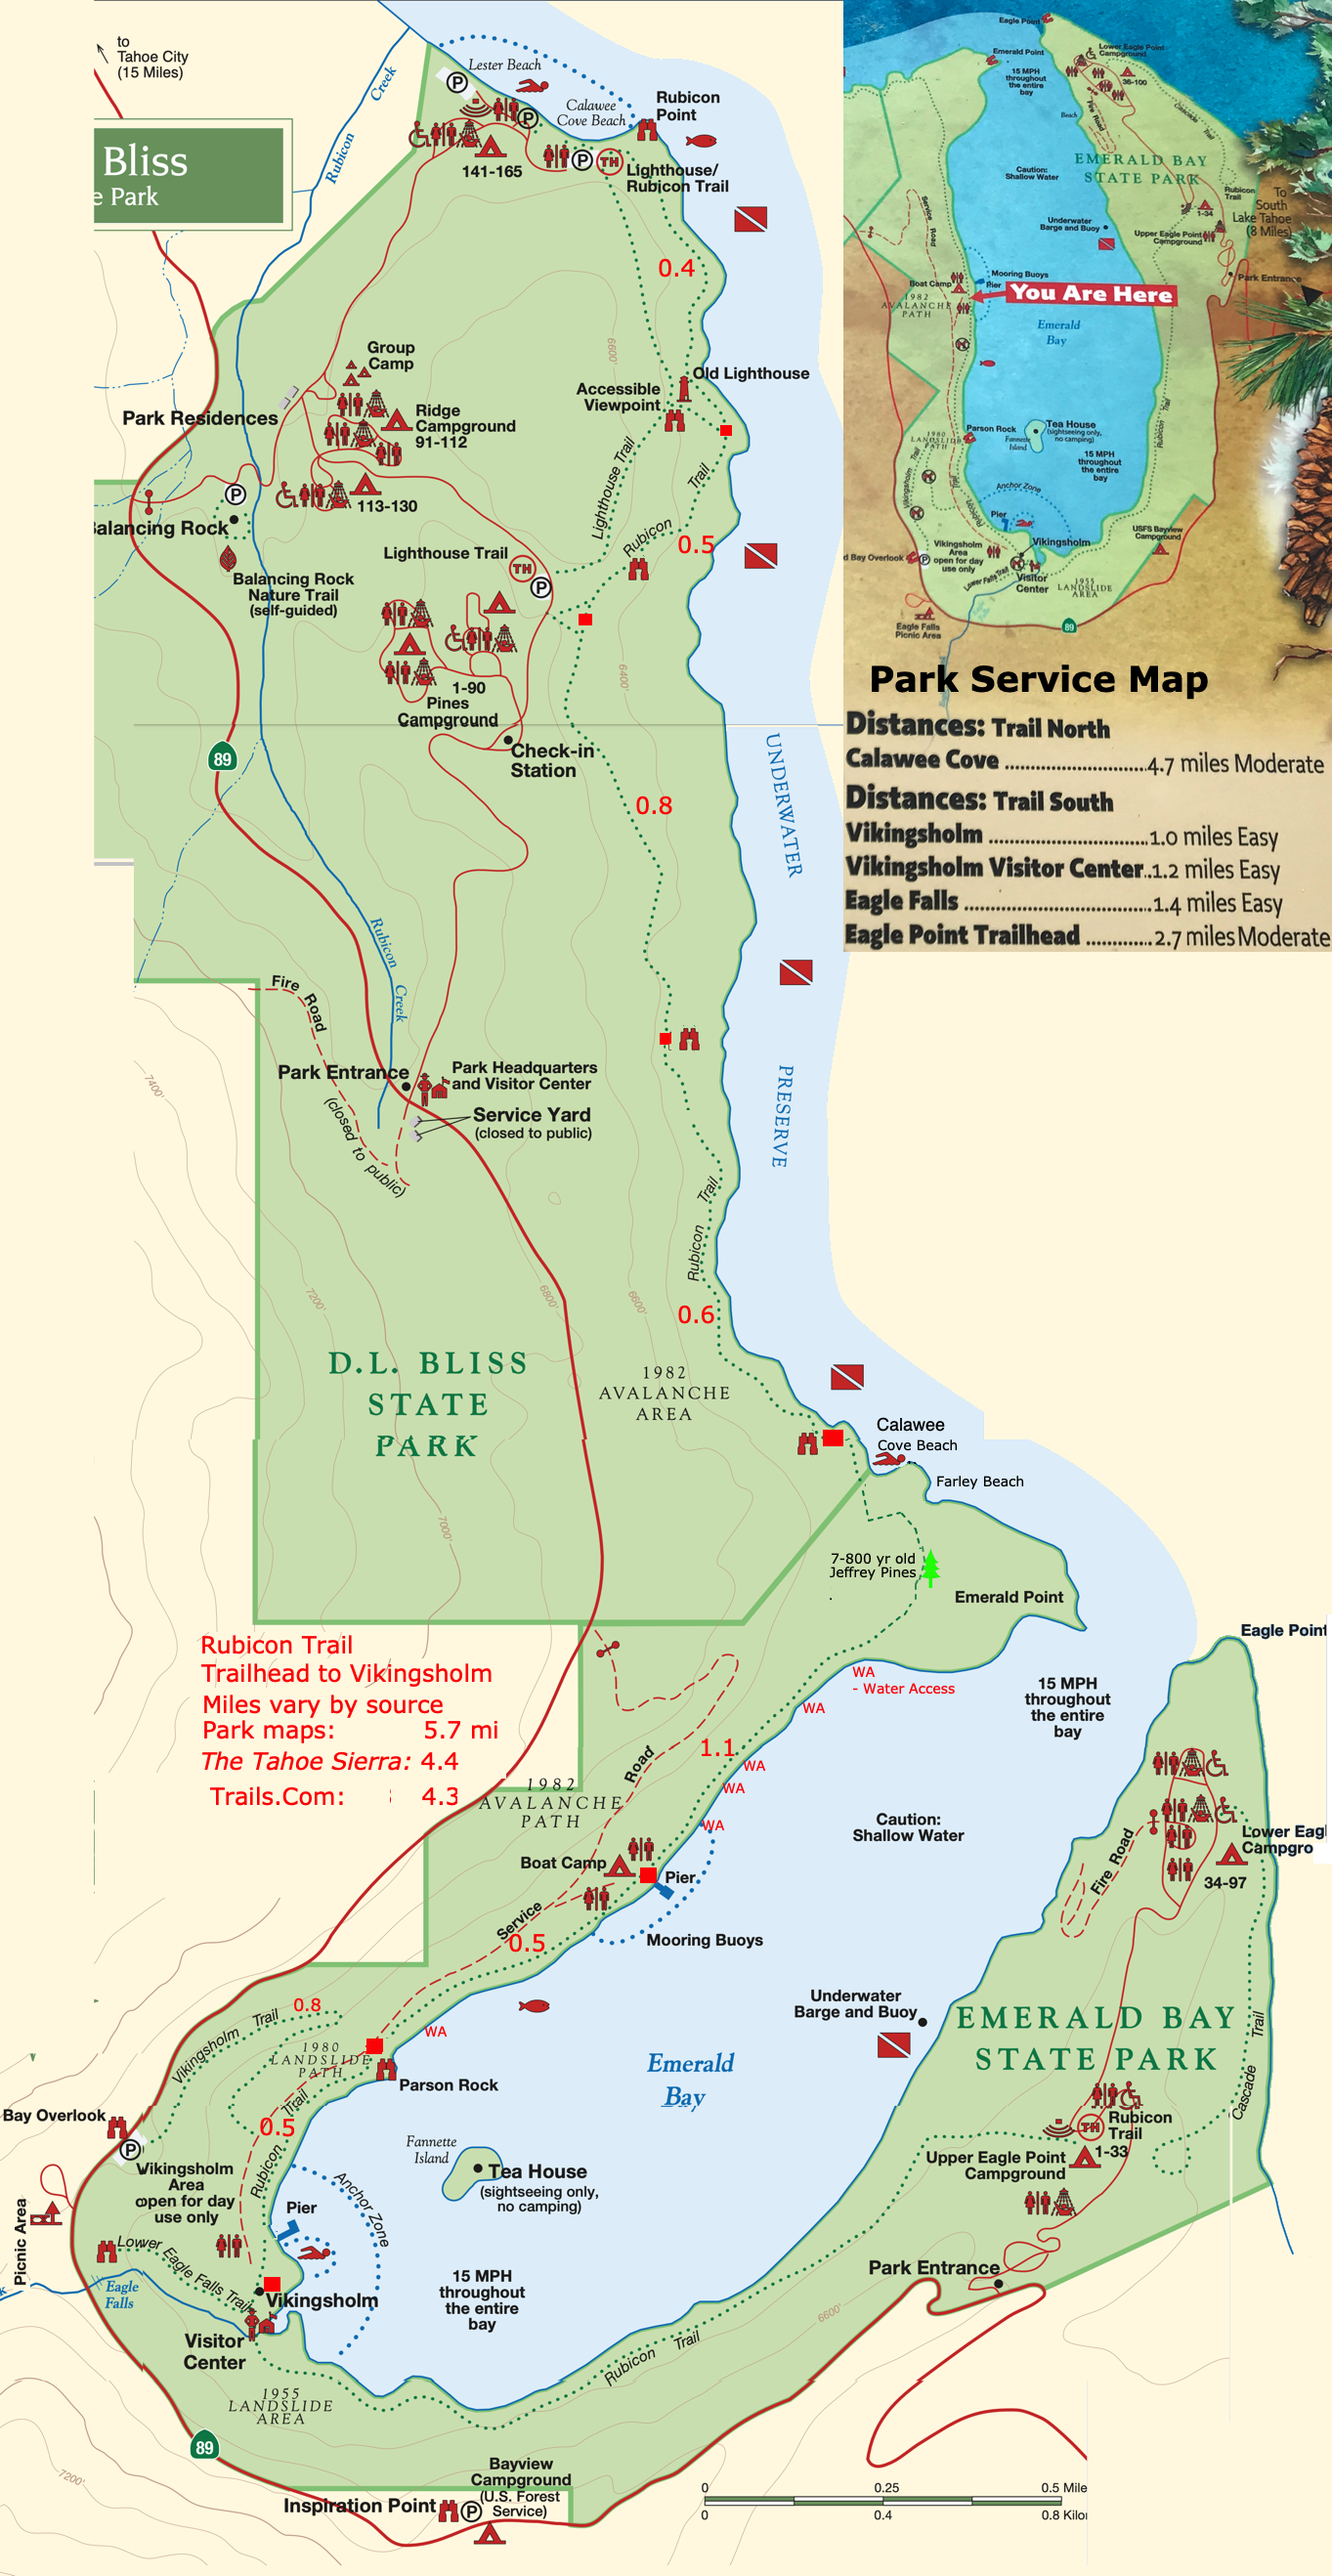 rubicon trail, balancing rock, 90 foot wall, vikingsholm, Eagle falls, D. L. Bliss State Park, Emerald Bay State Park